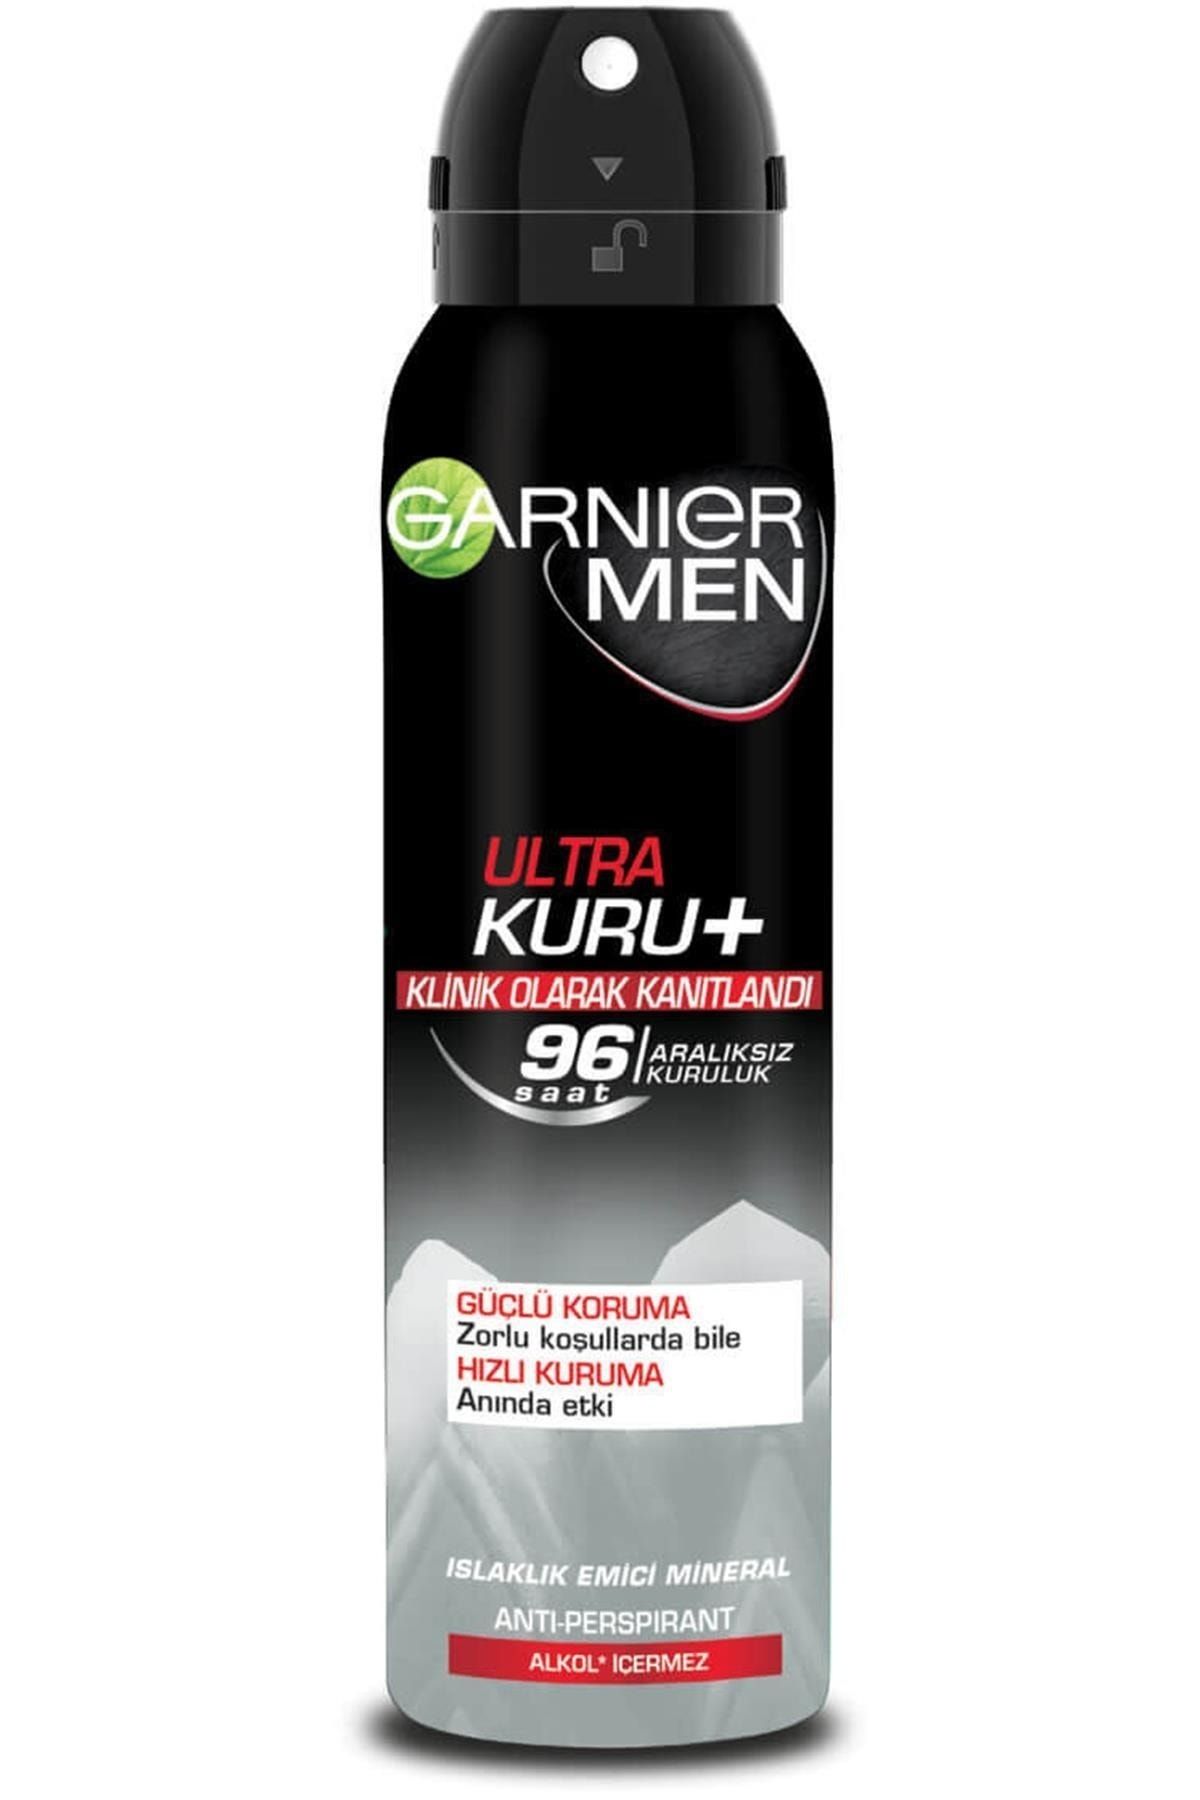 Garnier Garnier Men Ultra Kuru+Sprey 150 Ml